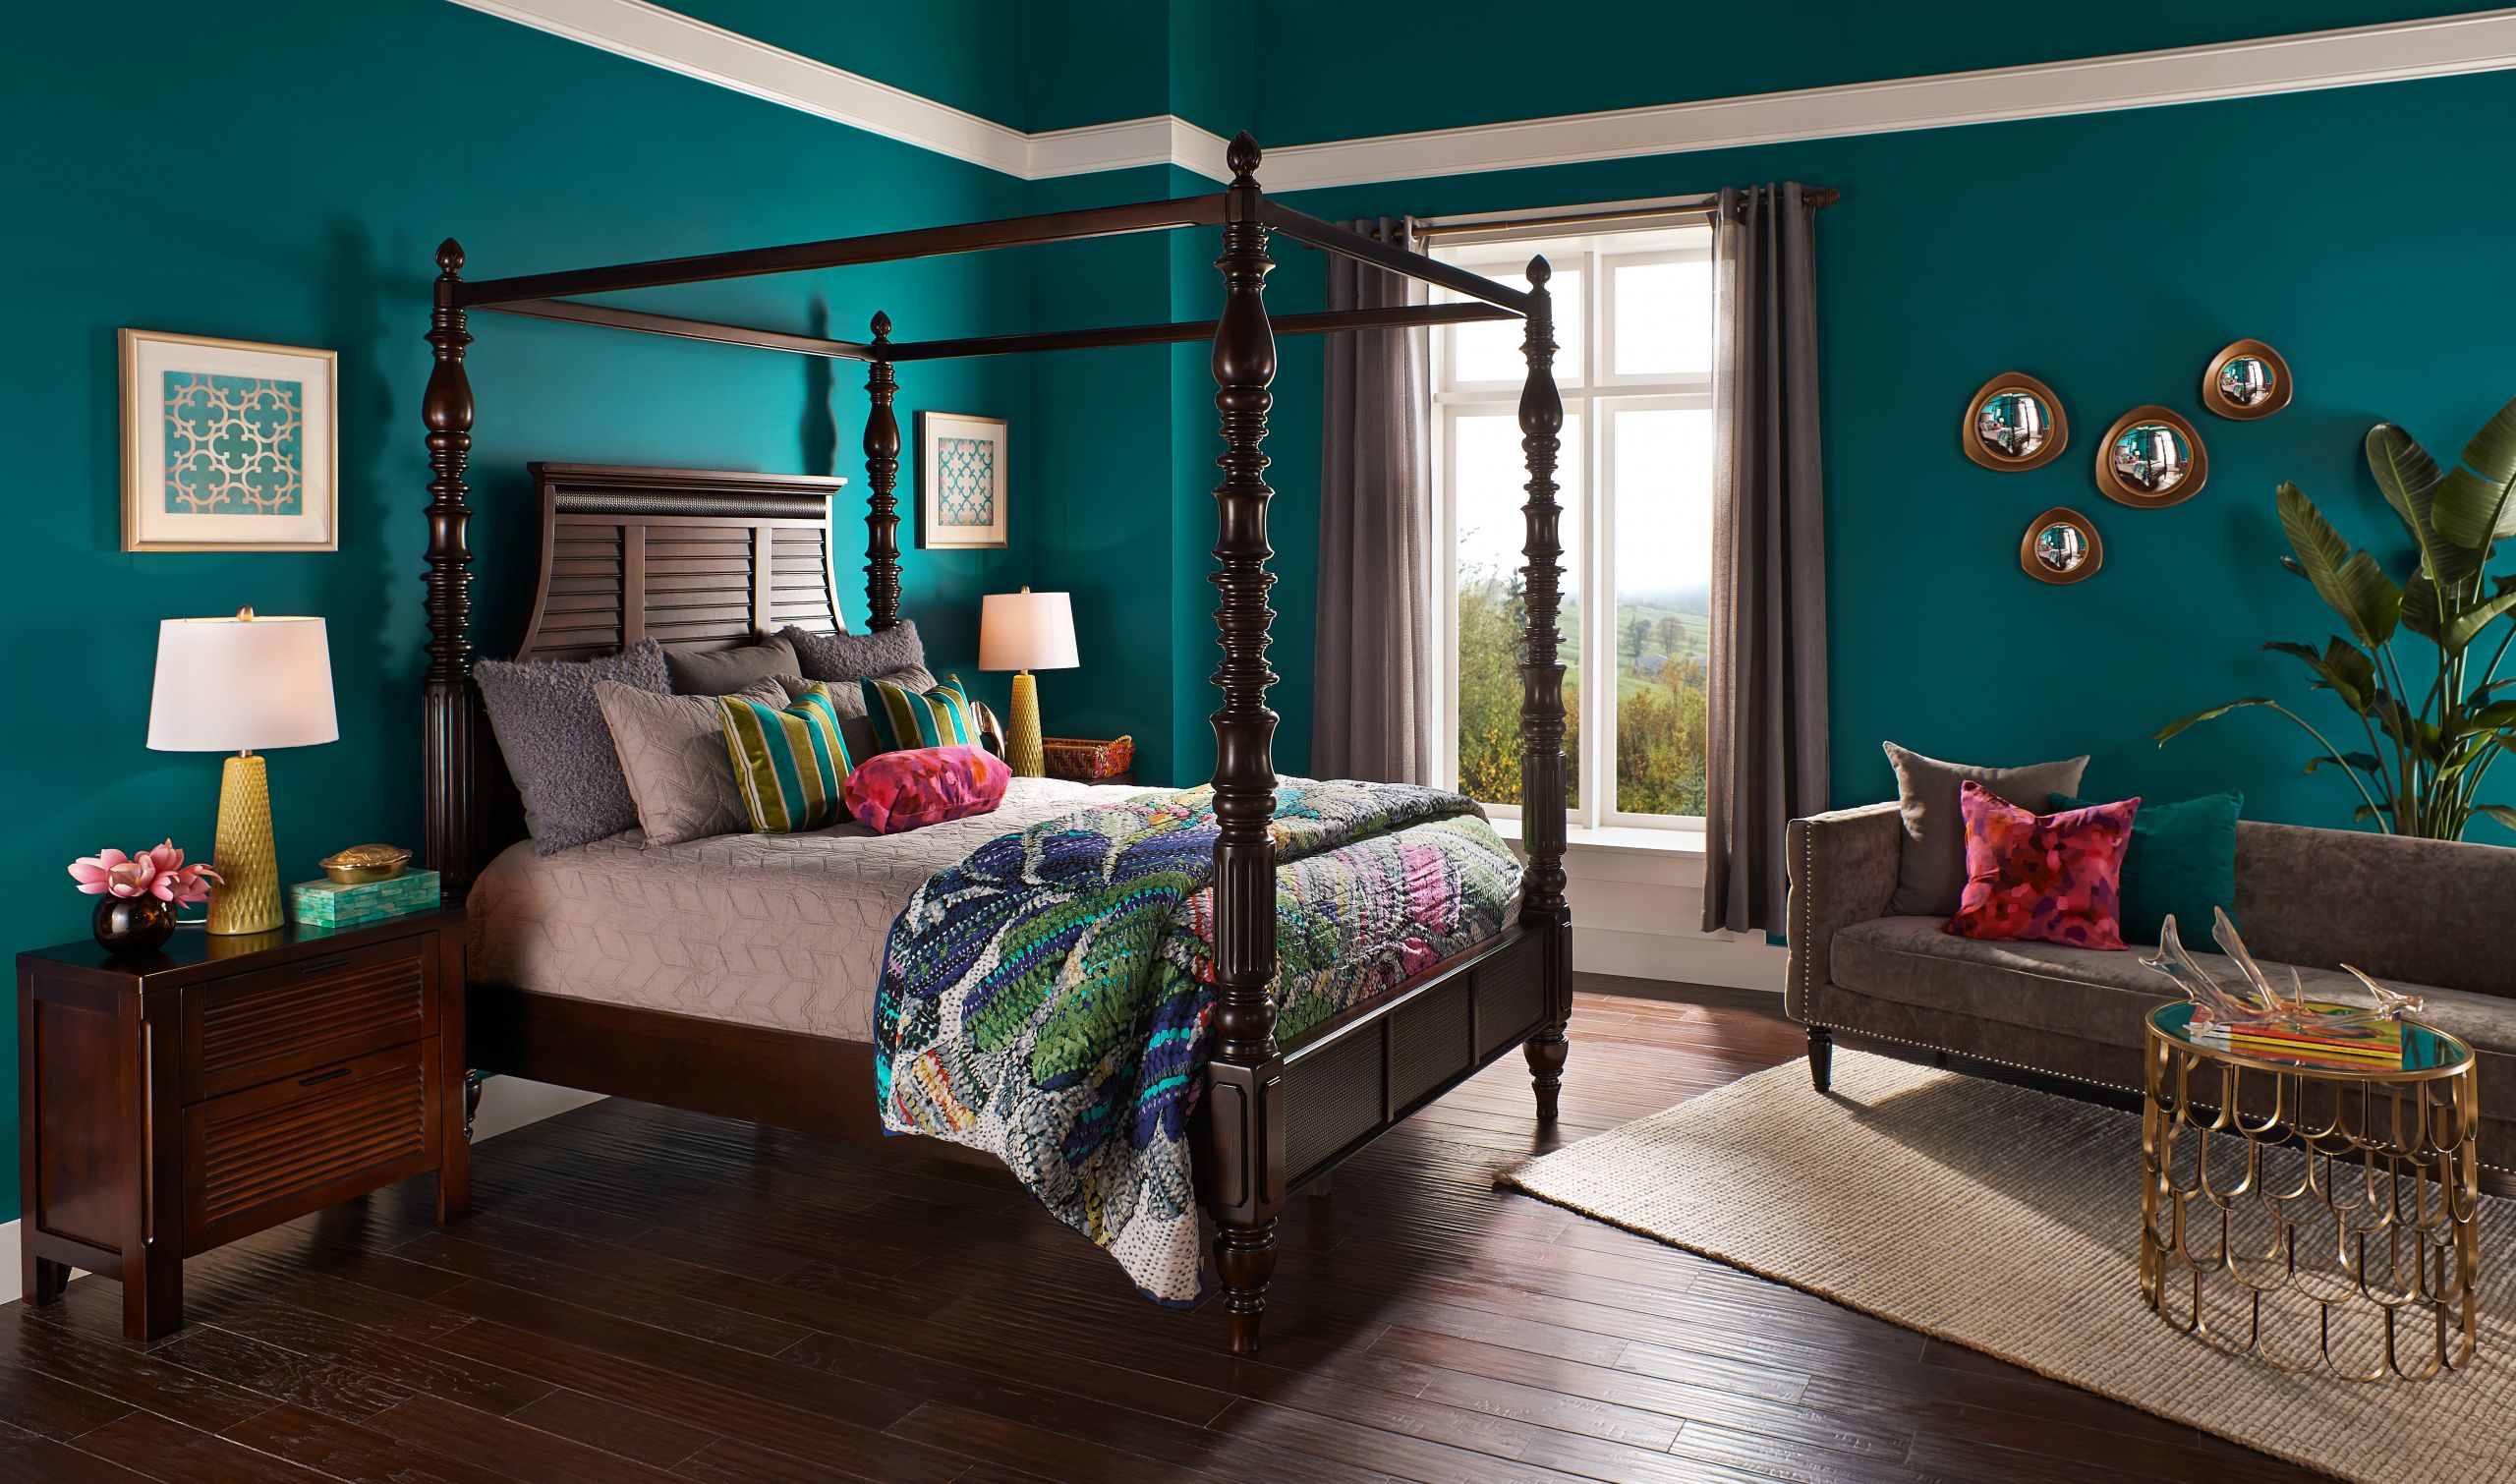 Behr Bedroom Paint Colors
 Behr Paints Introduces 2015 Color Trends Featuring Four